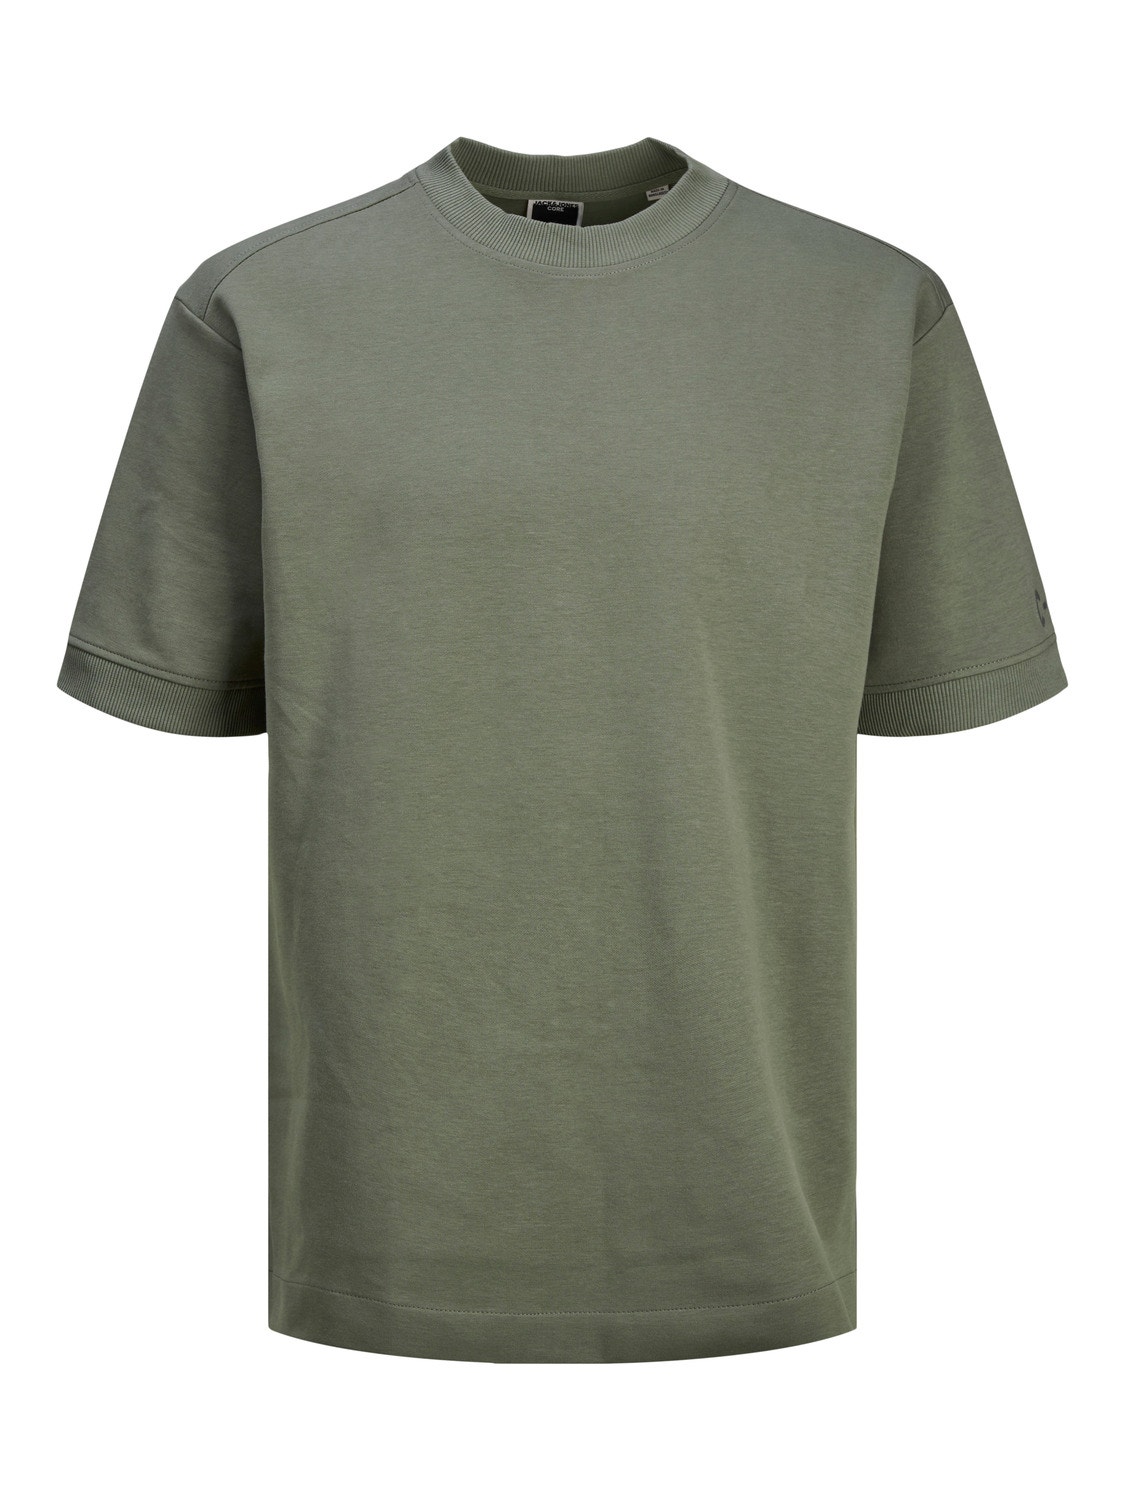 Jack & Jones Plain Crew neck T-shirt -Agave Green - 12253379